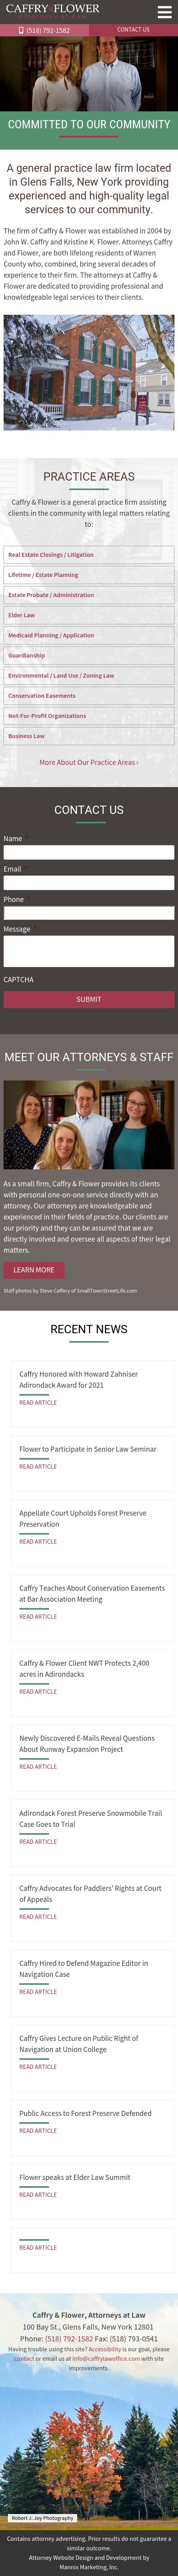 Caffry & Flower - Glens Falls NY Lawyers